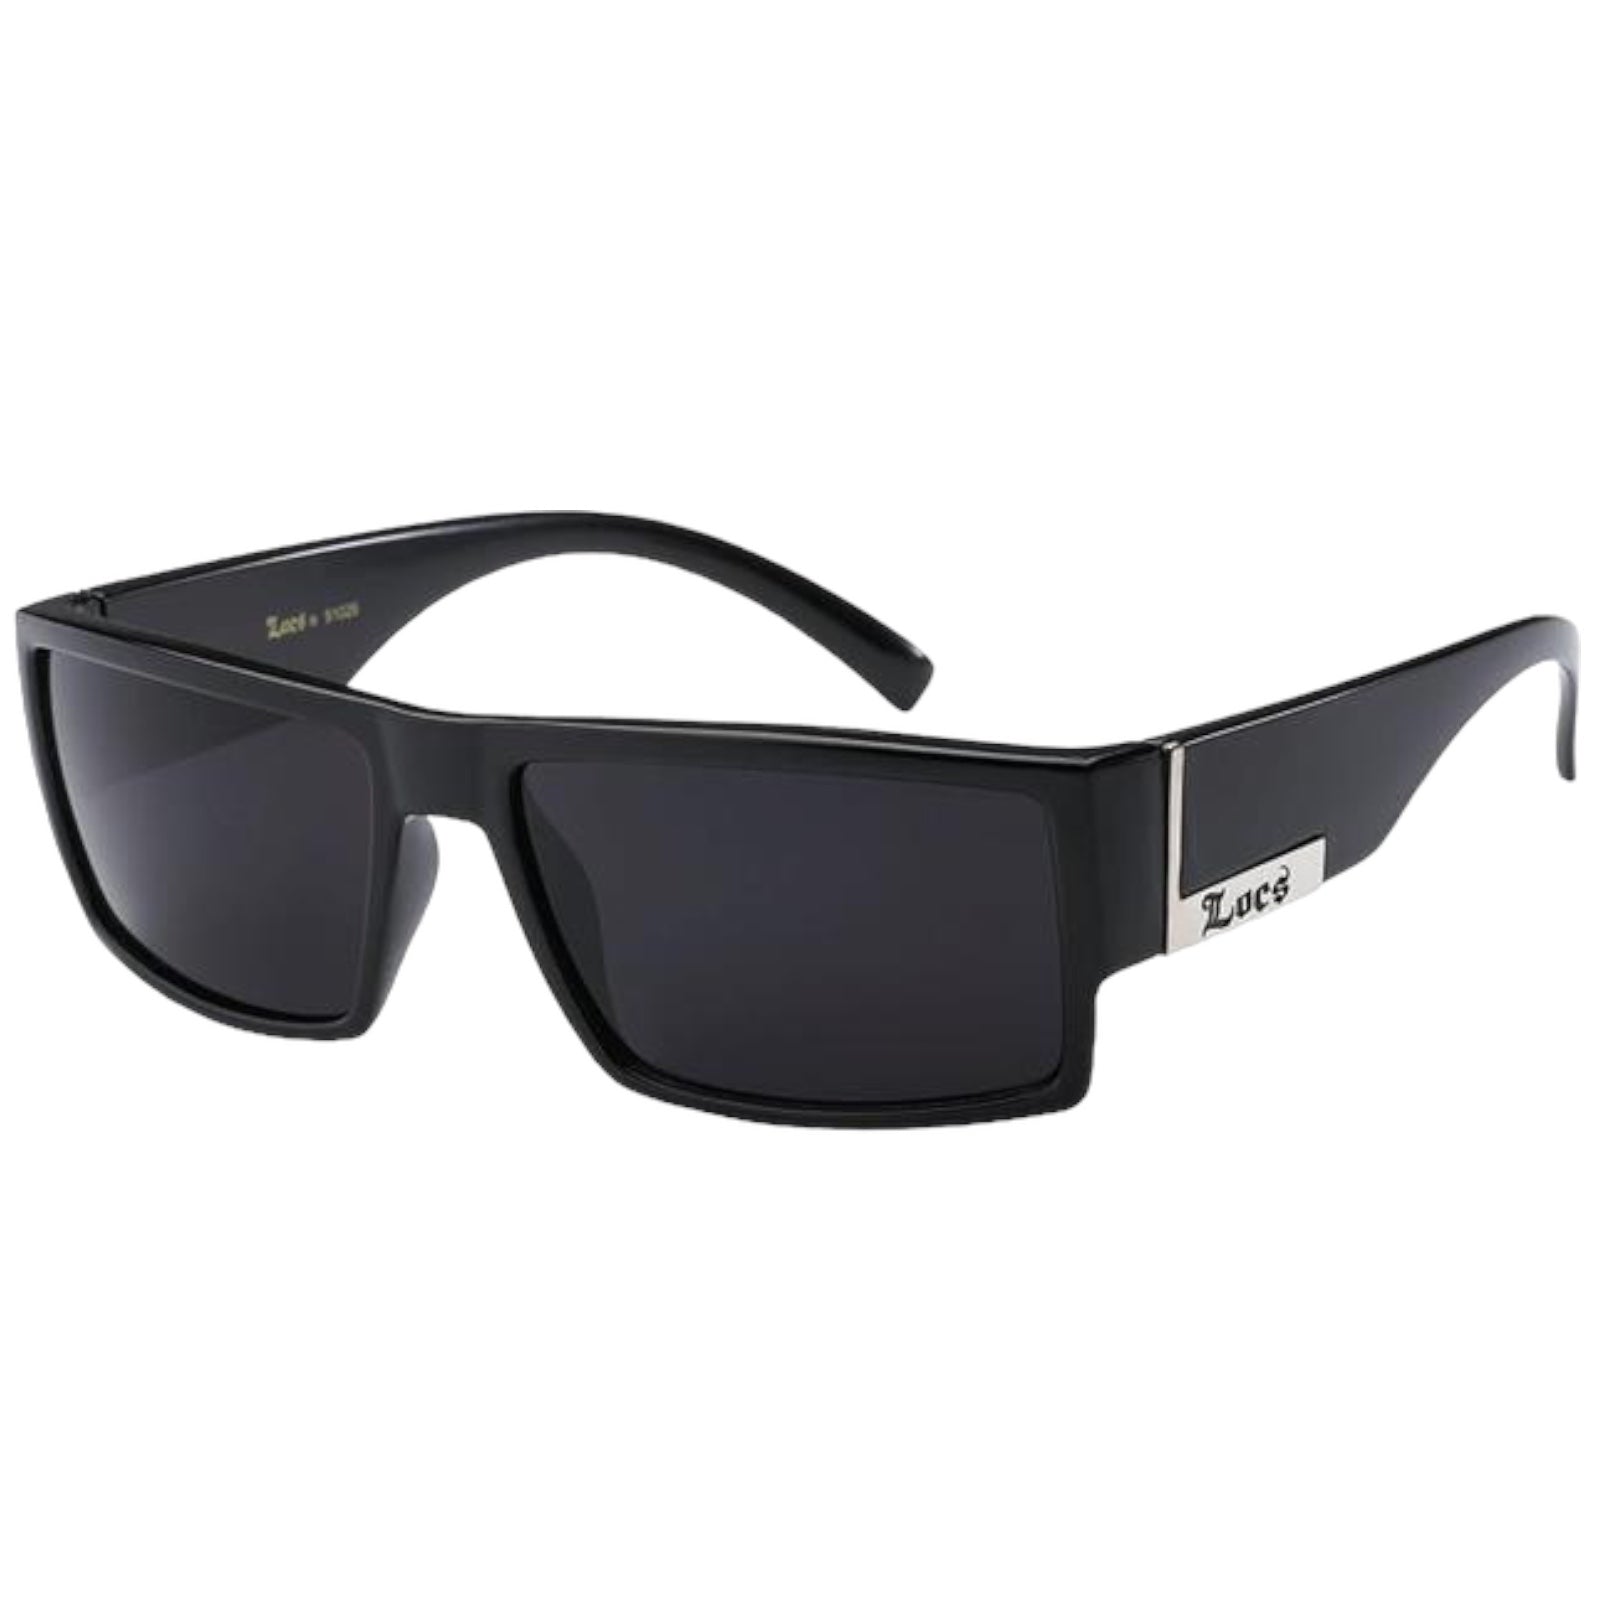 Designer Small Locs Black Flat Top Wrap Around Sunglasses for Men Gloss Black Smoke Lens Locs Shades image_030d4c66-6657-425f-84cb-c98c13870706